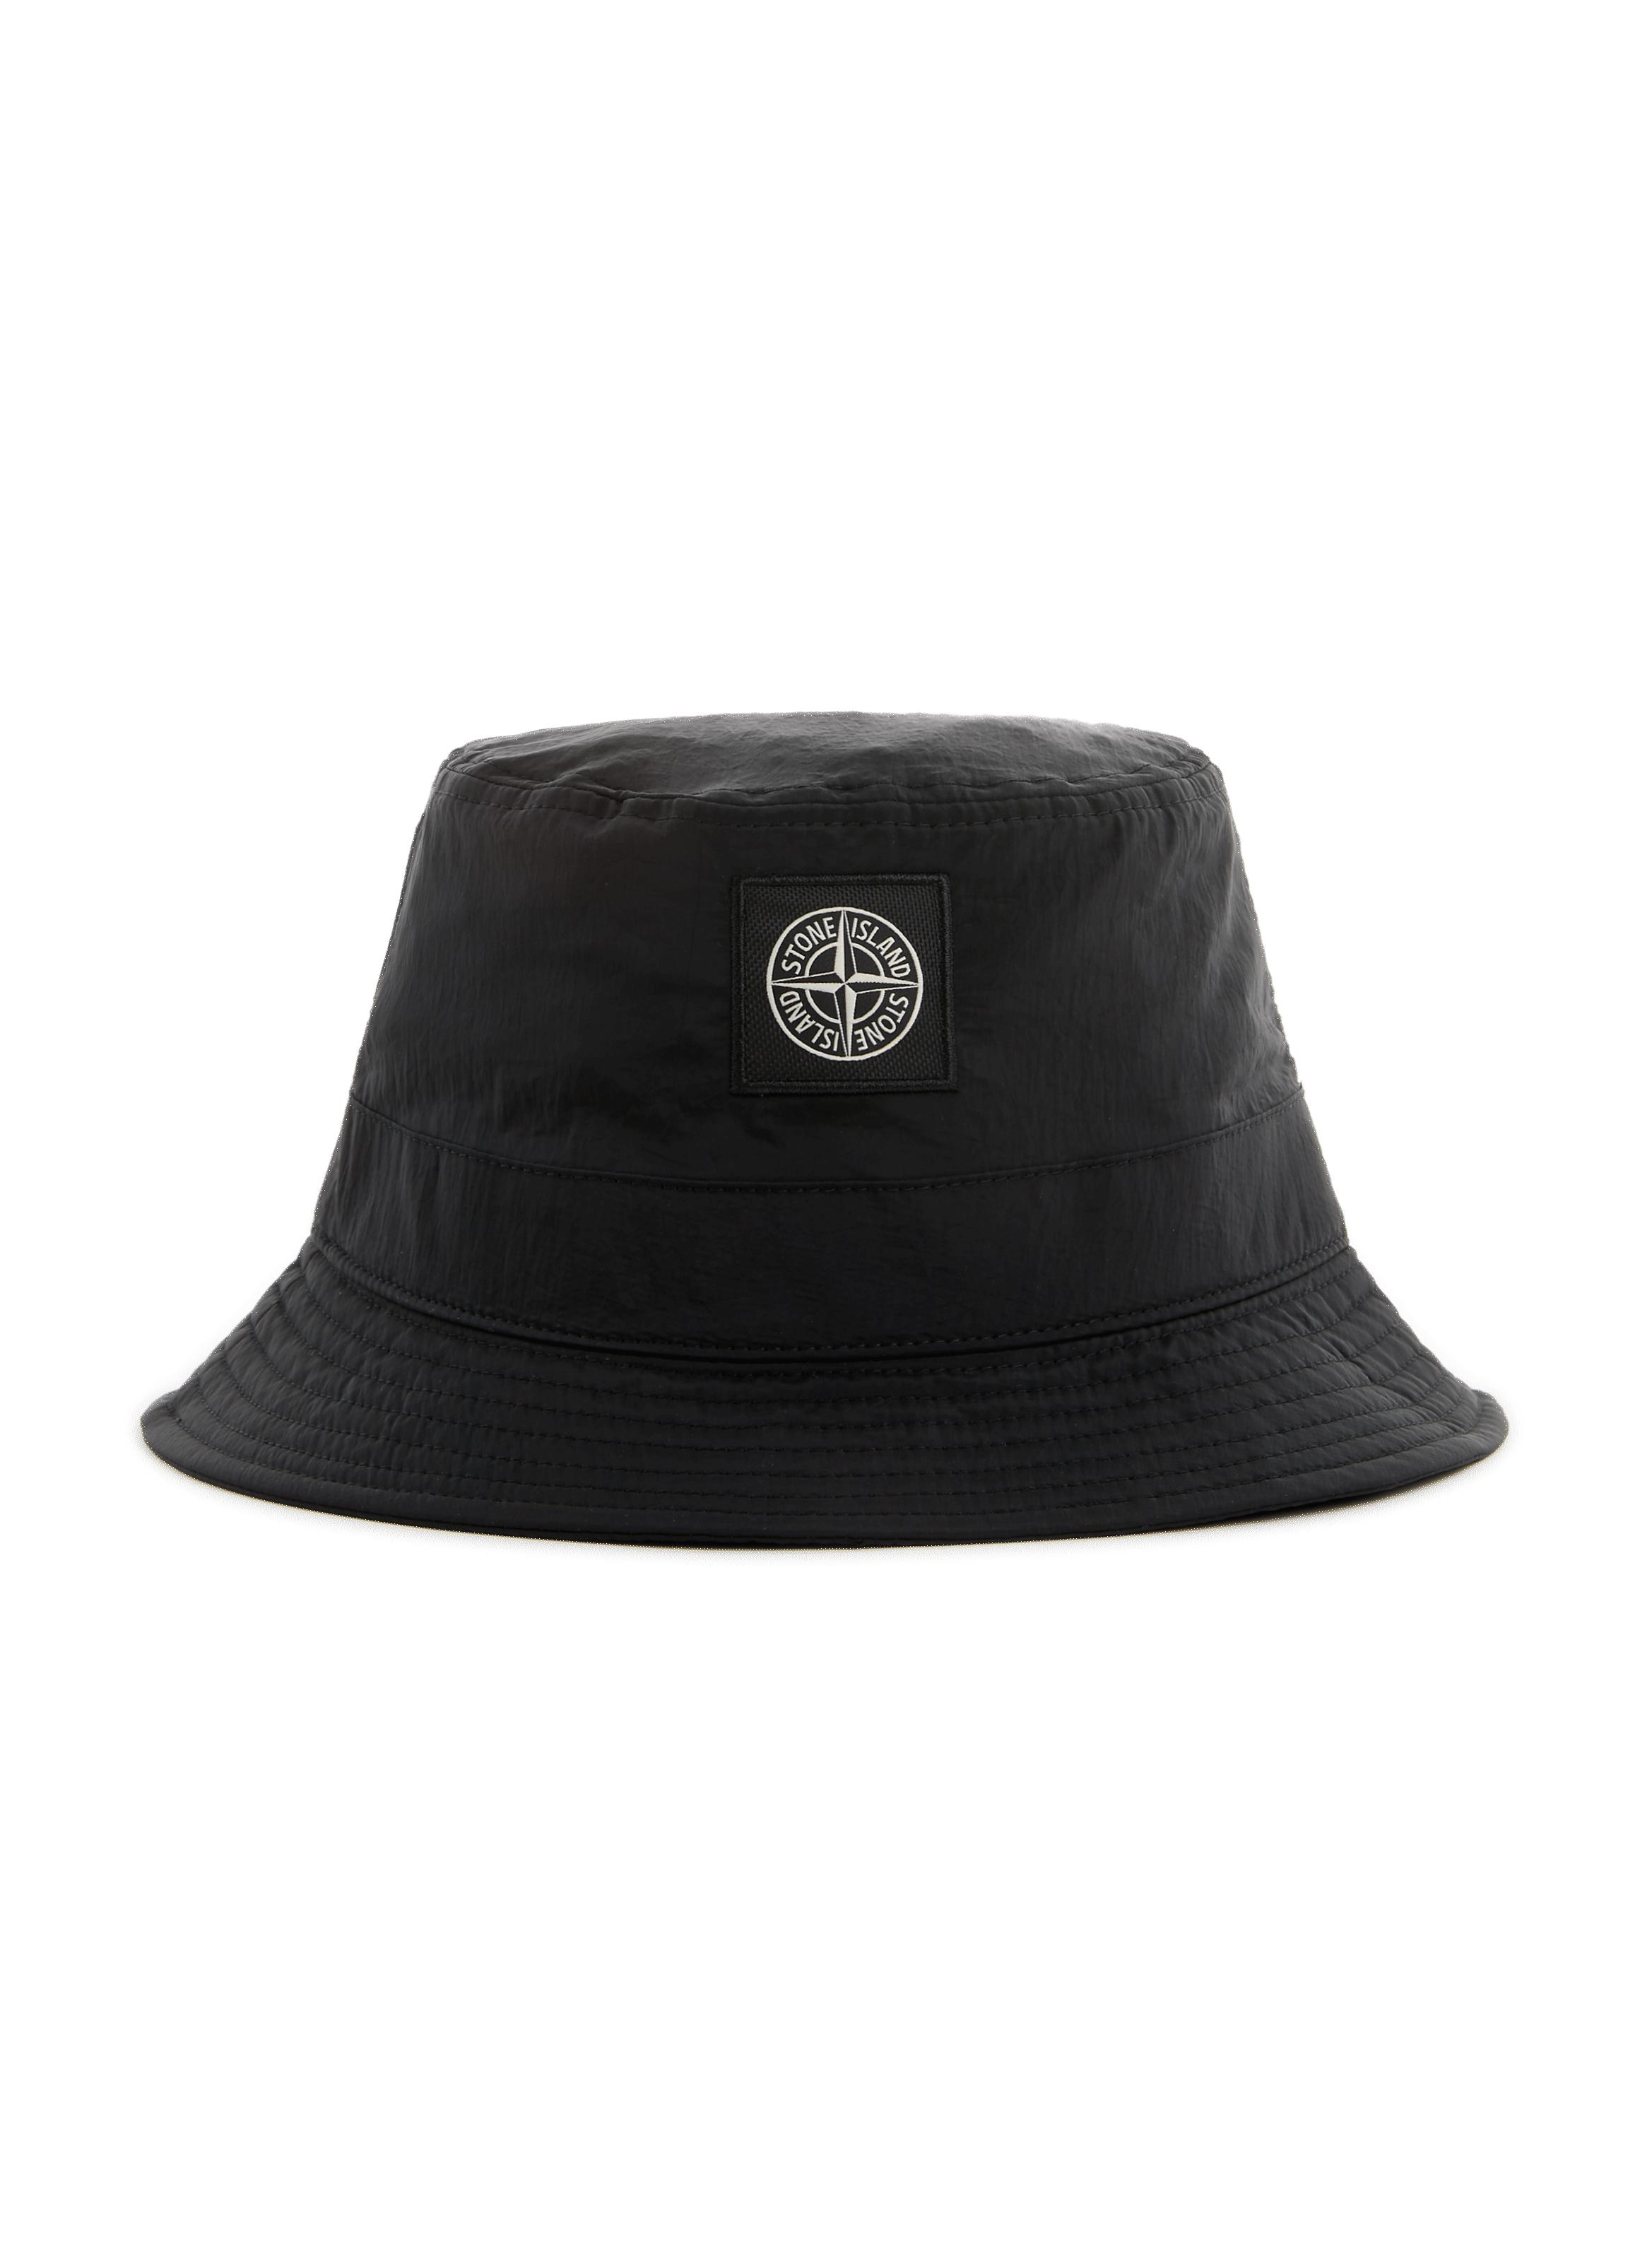 Stone Island Nylon Bucket Hat in Black for Men | Lyst UK